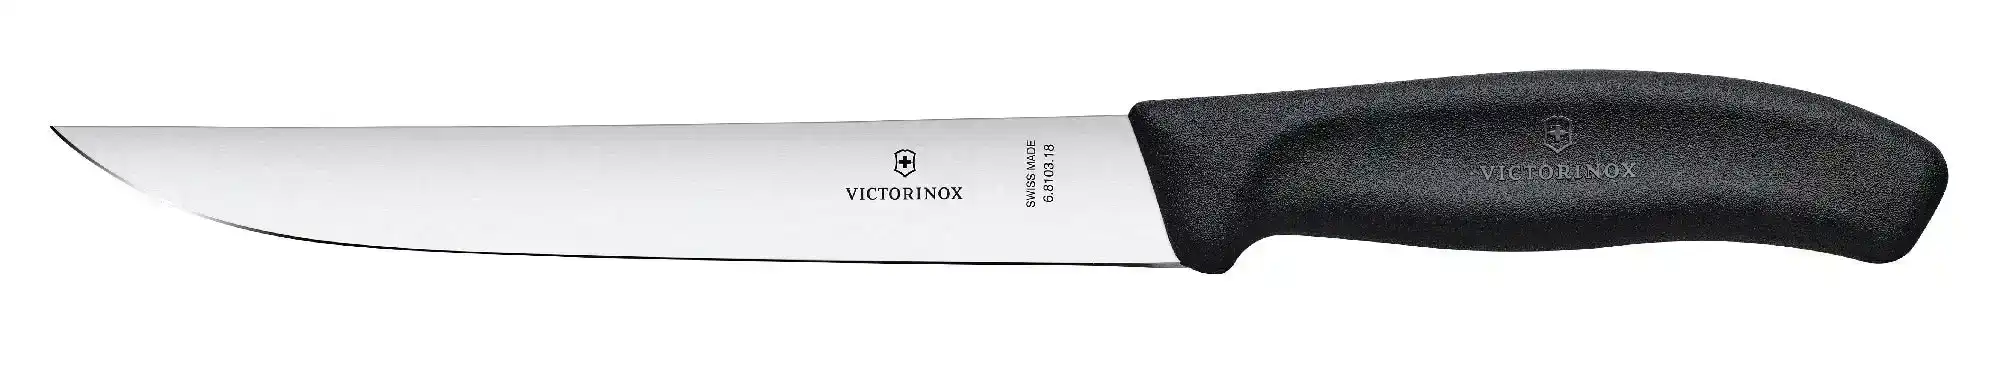 Victorinox Carving Knife 18cm - Black